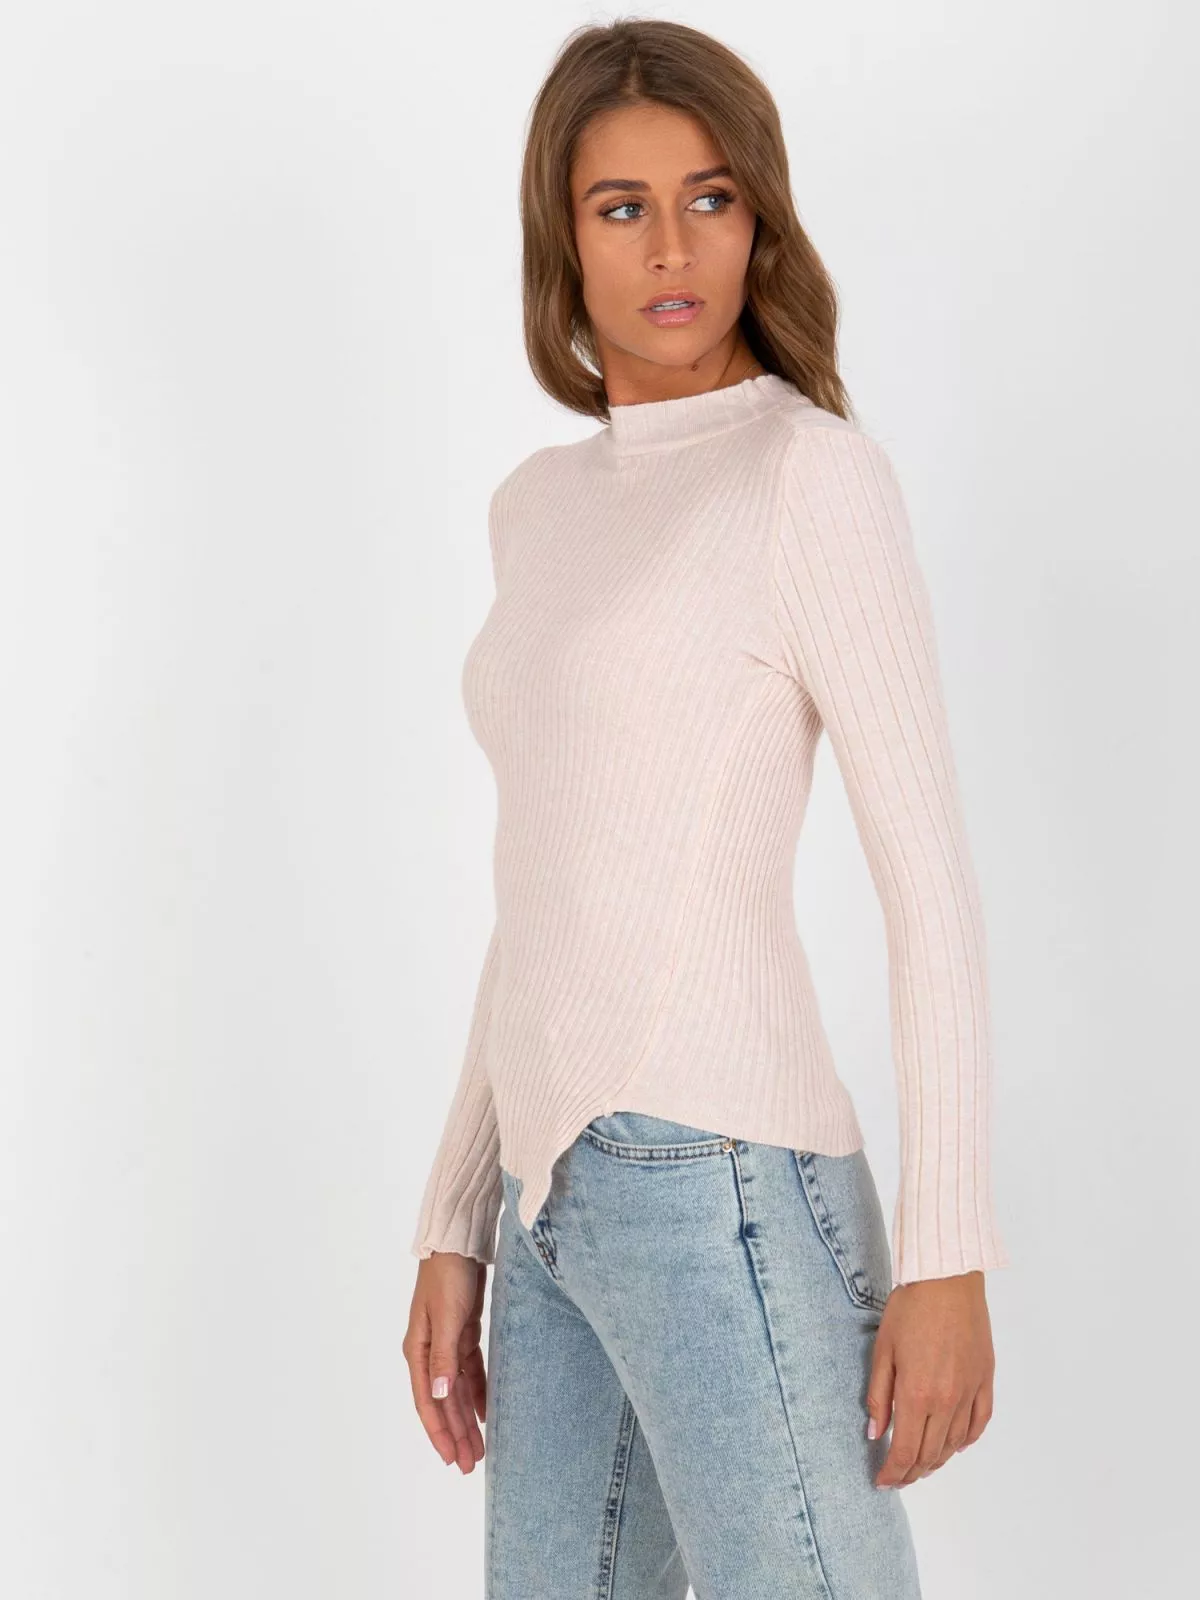 Pulover dama asimetric roz - pulovere